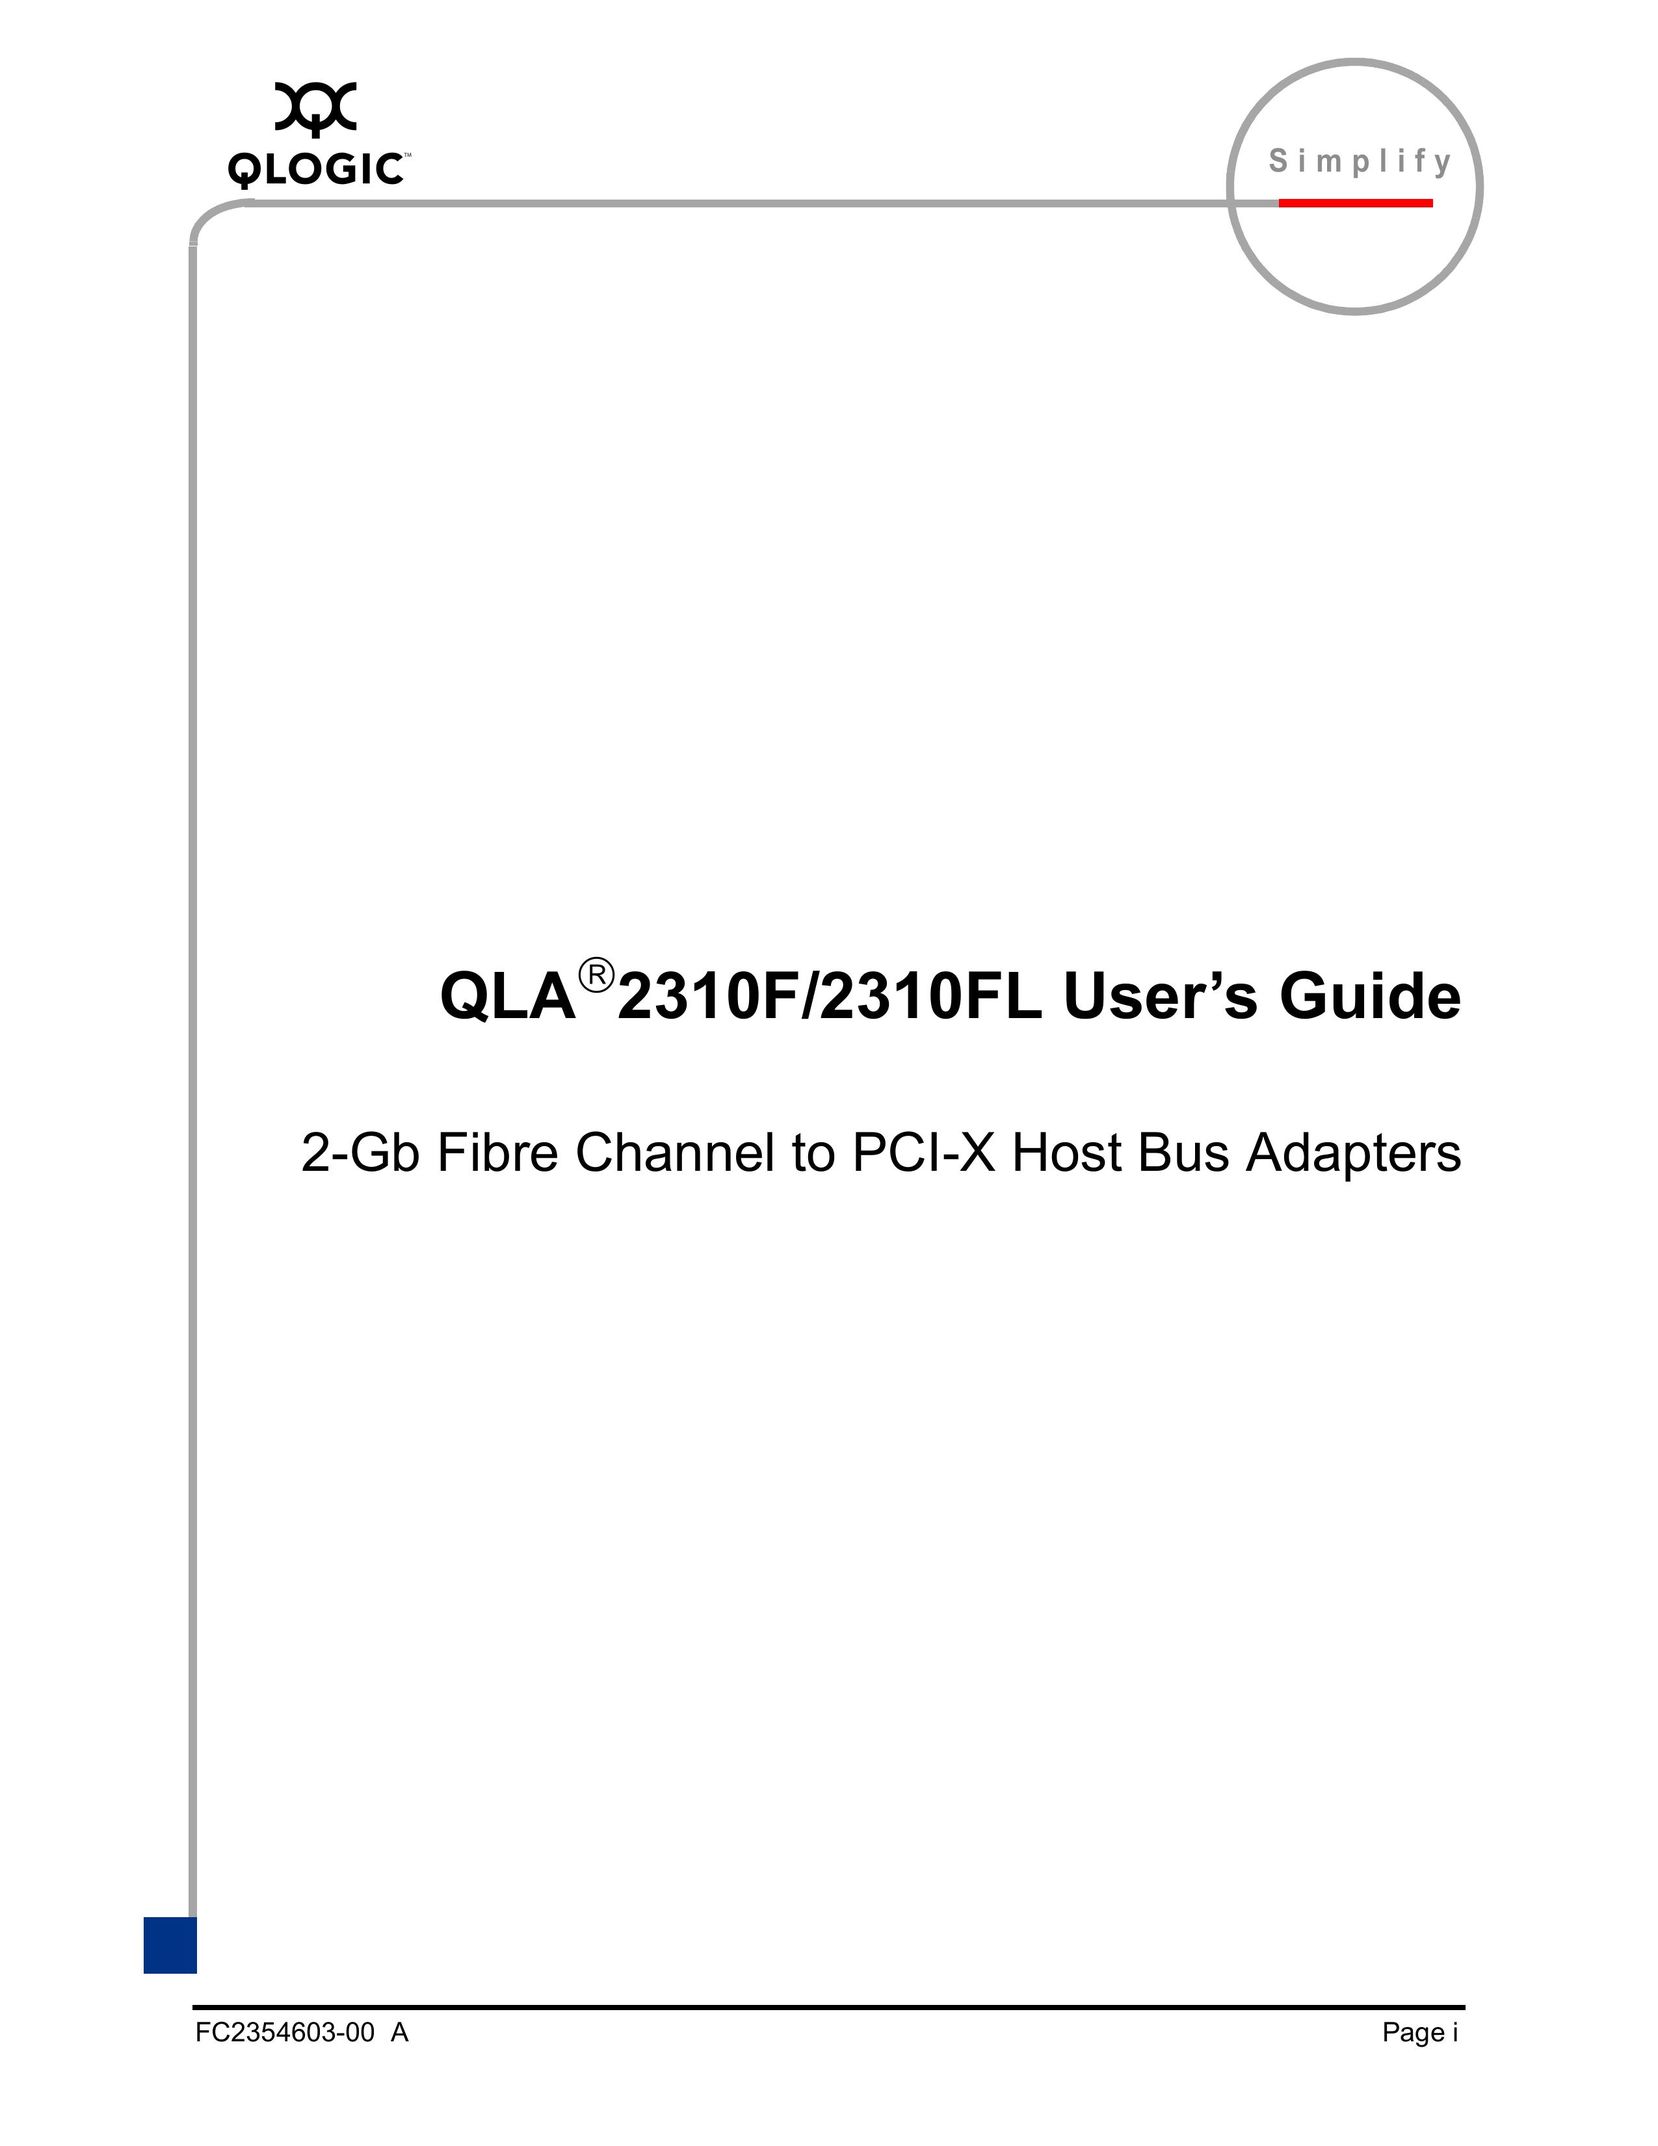 Q-Logic 2310FL Network Card User Manual